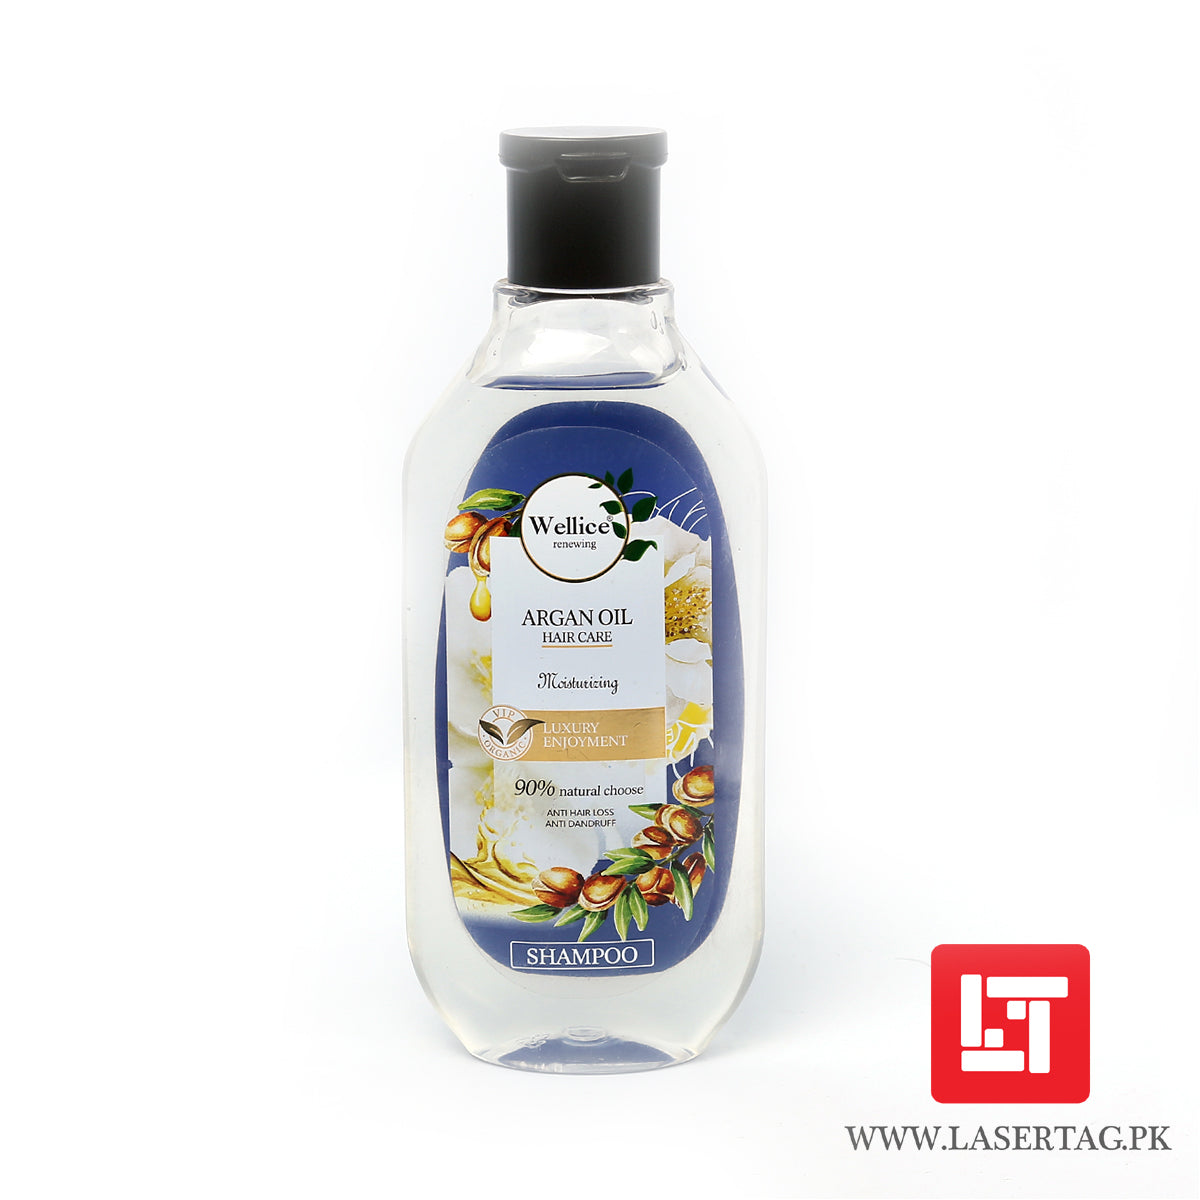 Wellice New Argan Oil Shampoo Moisturizing Anti Hair Loss AntiDandruf 400g freeshipping - lasertag.pk